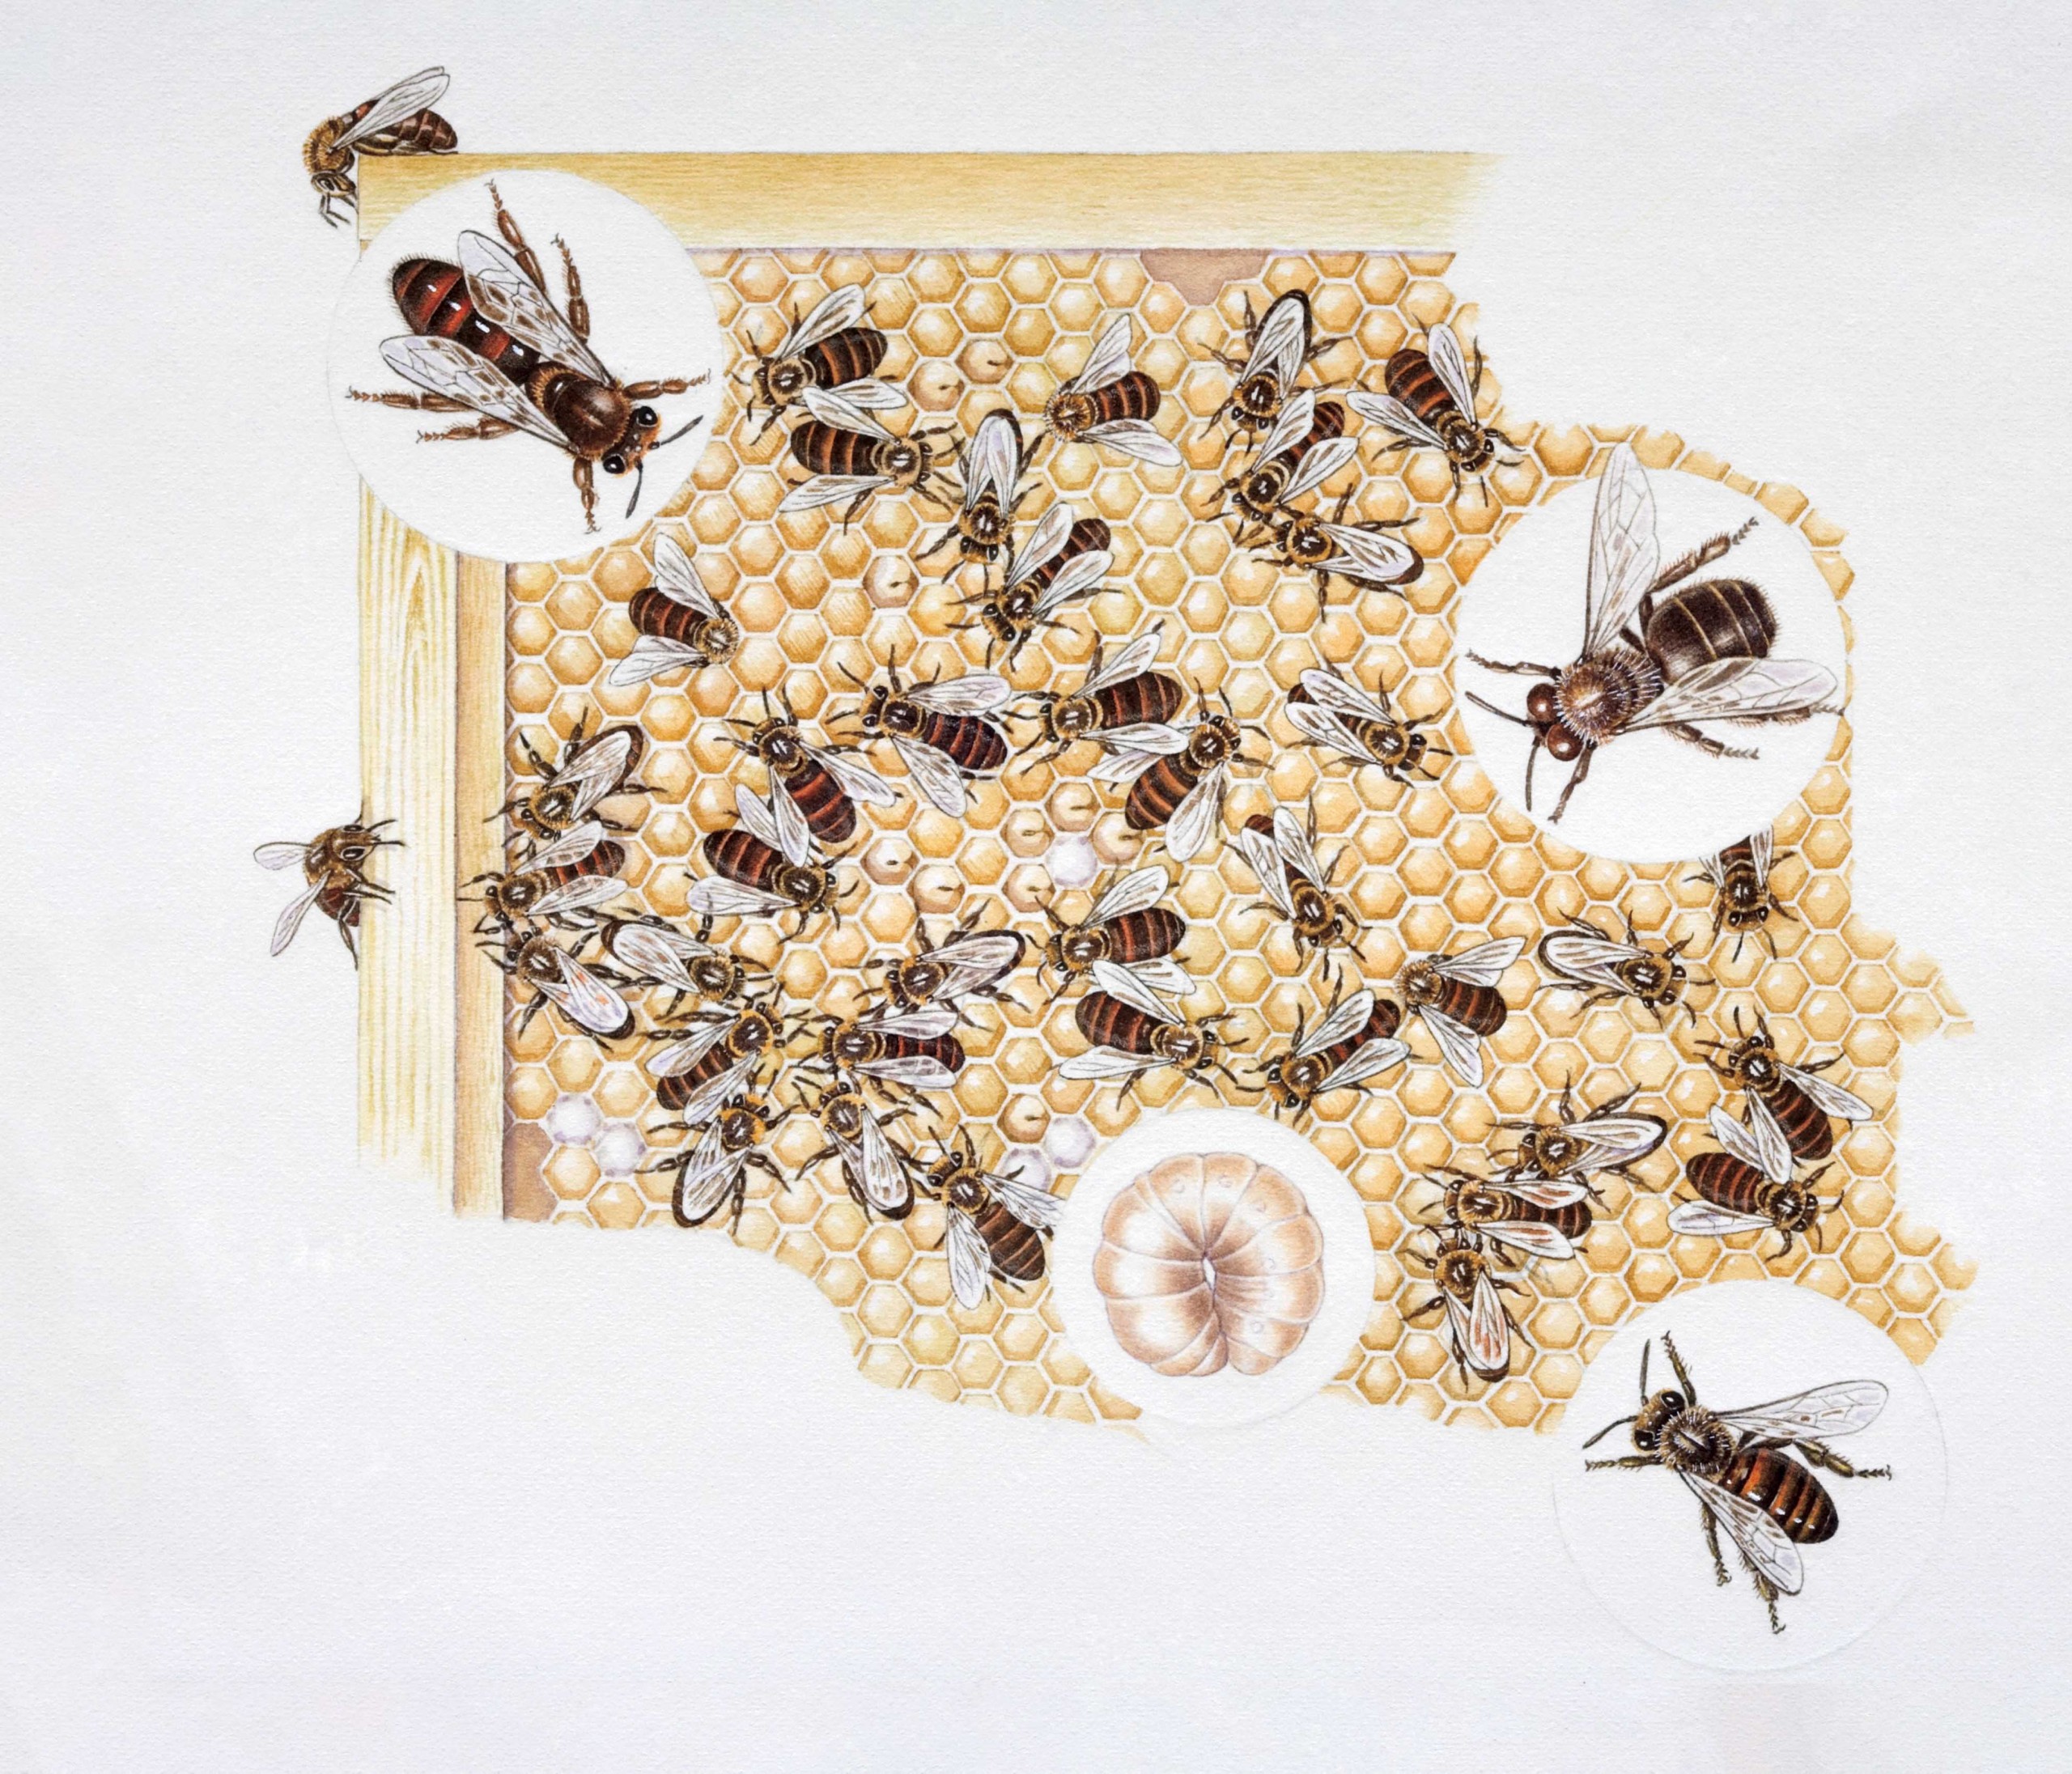 Bees Colony